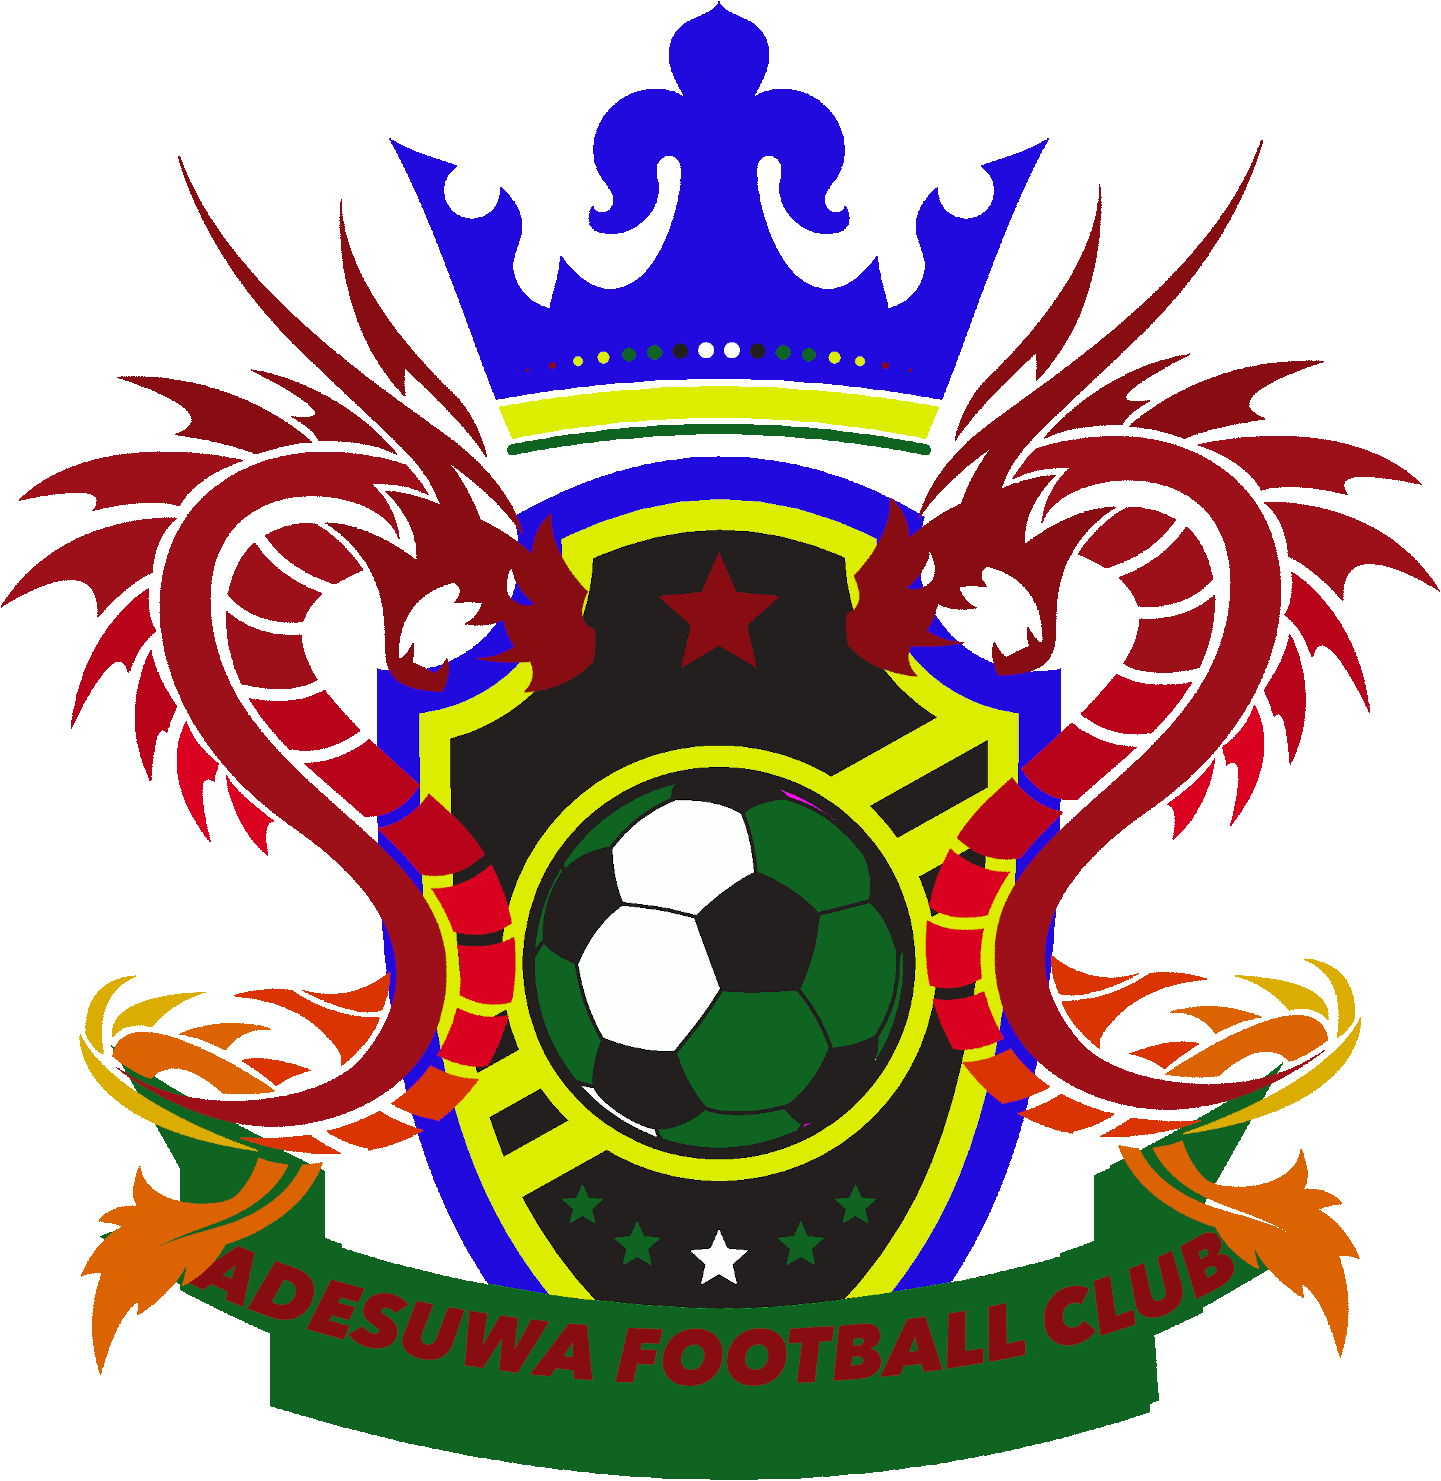 Adesuwa Football Club